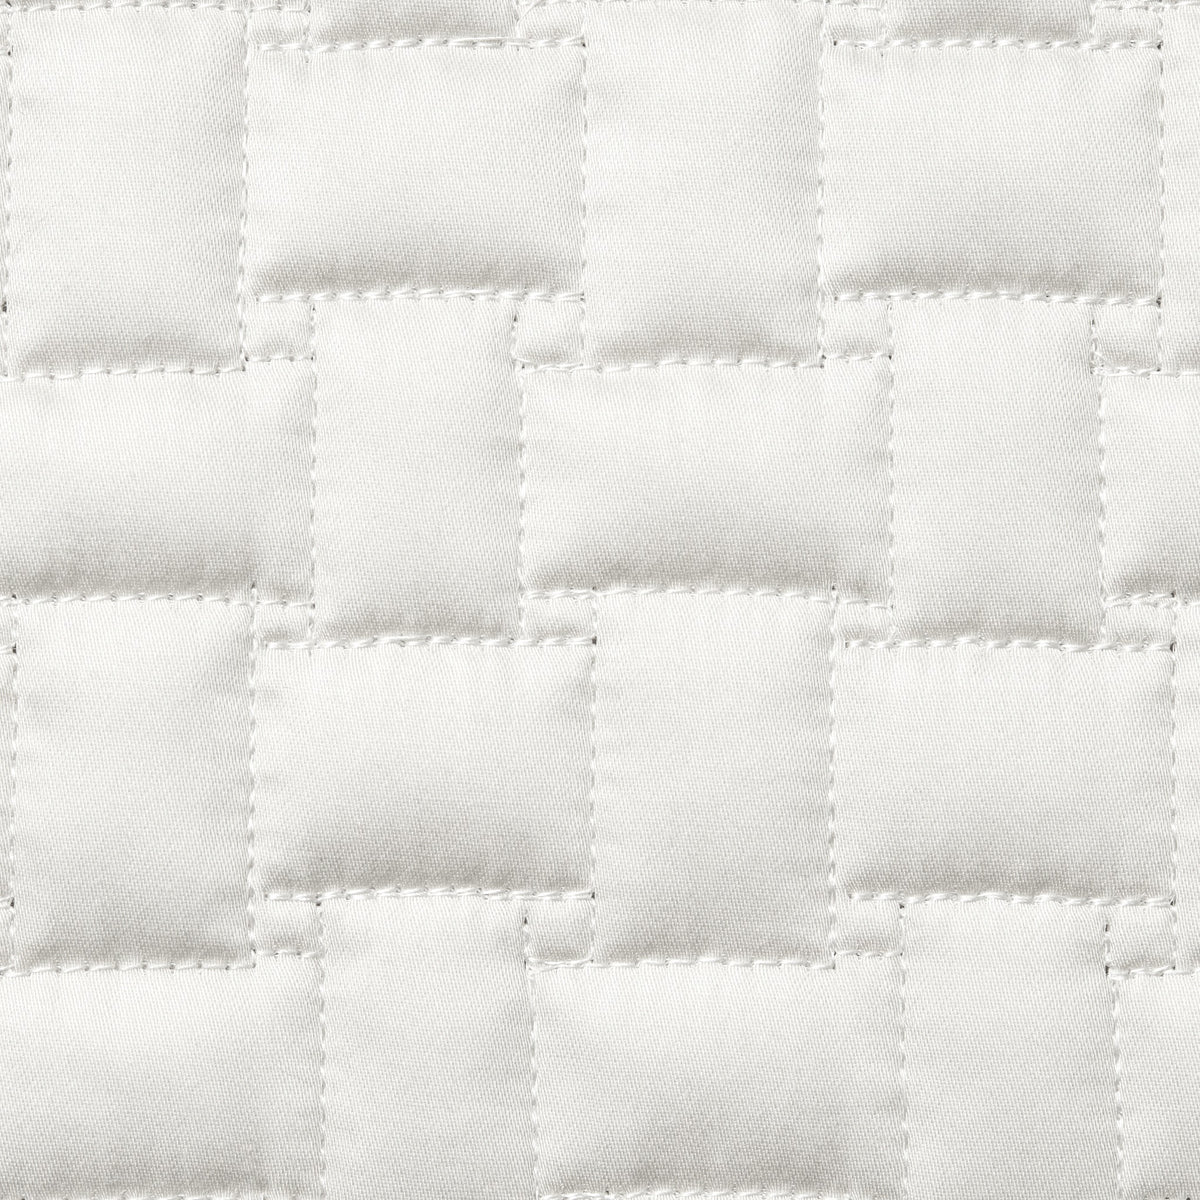 Swatch Sample of Sferra Sampietrini Quilts and Shams White